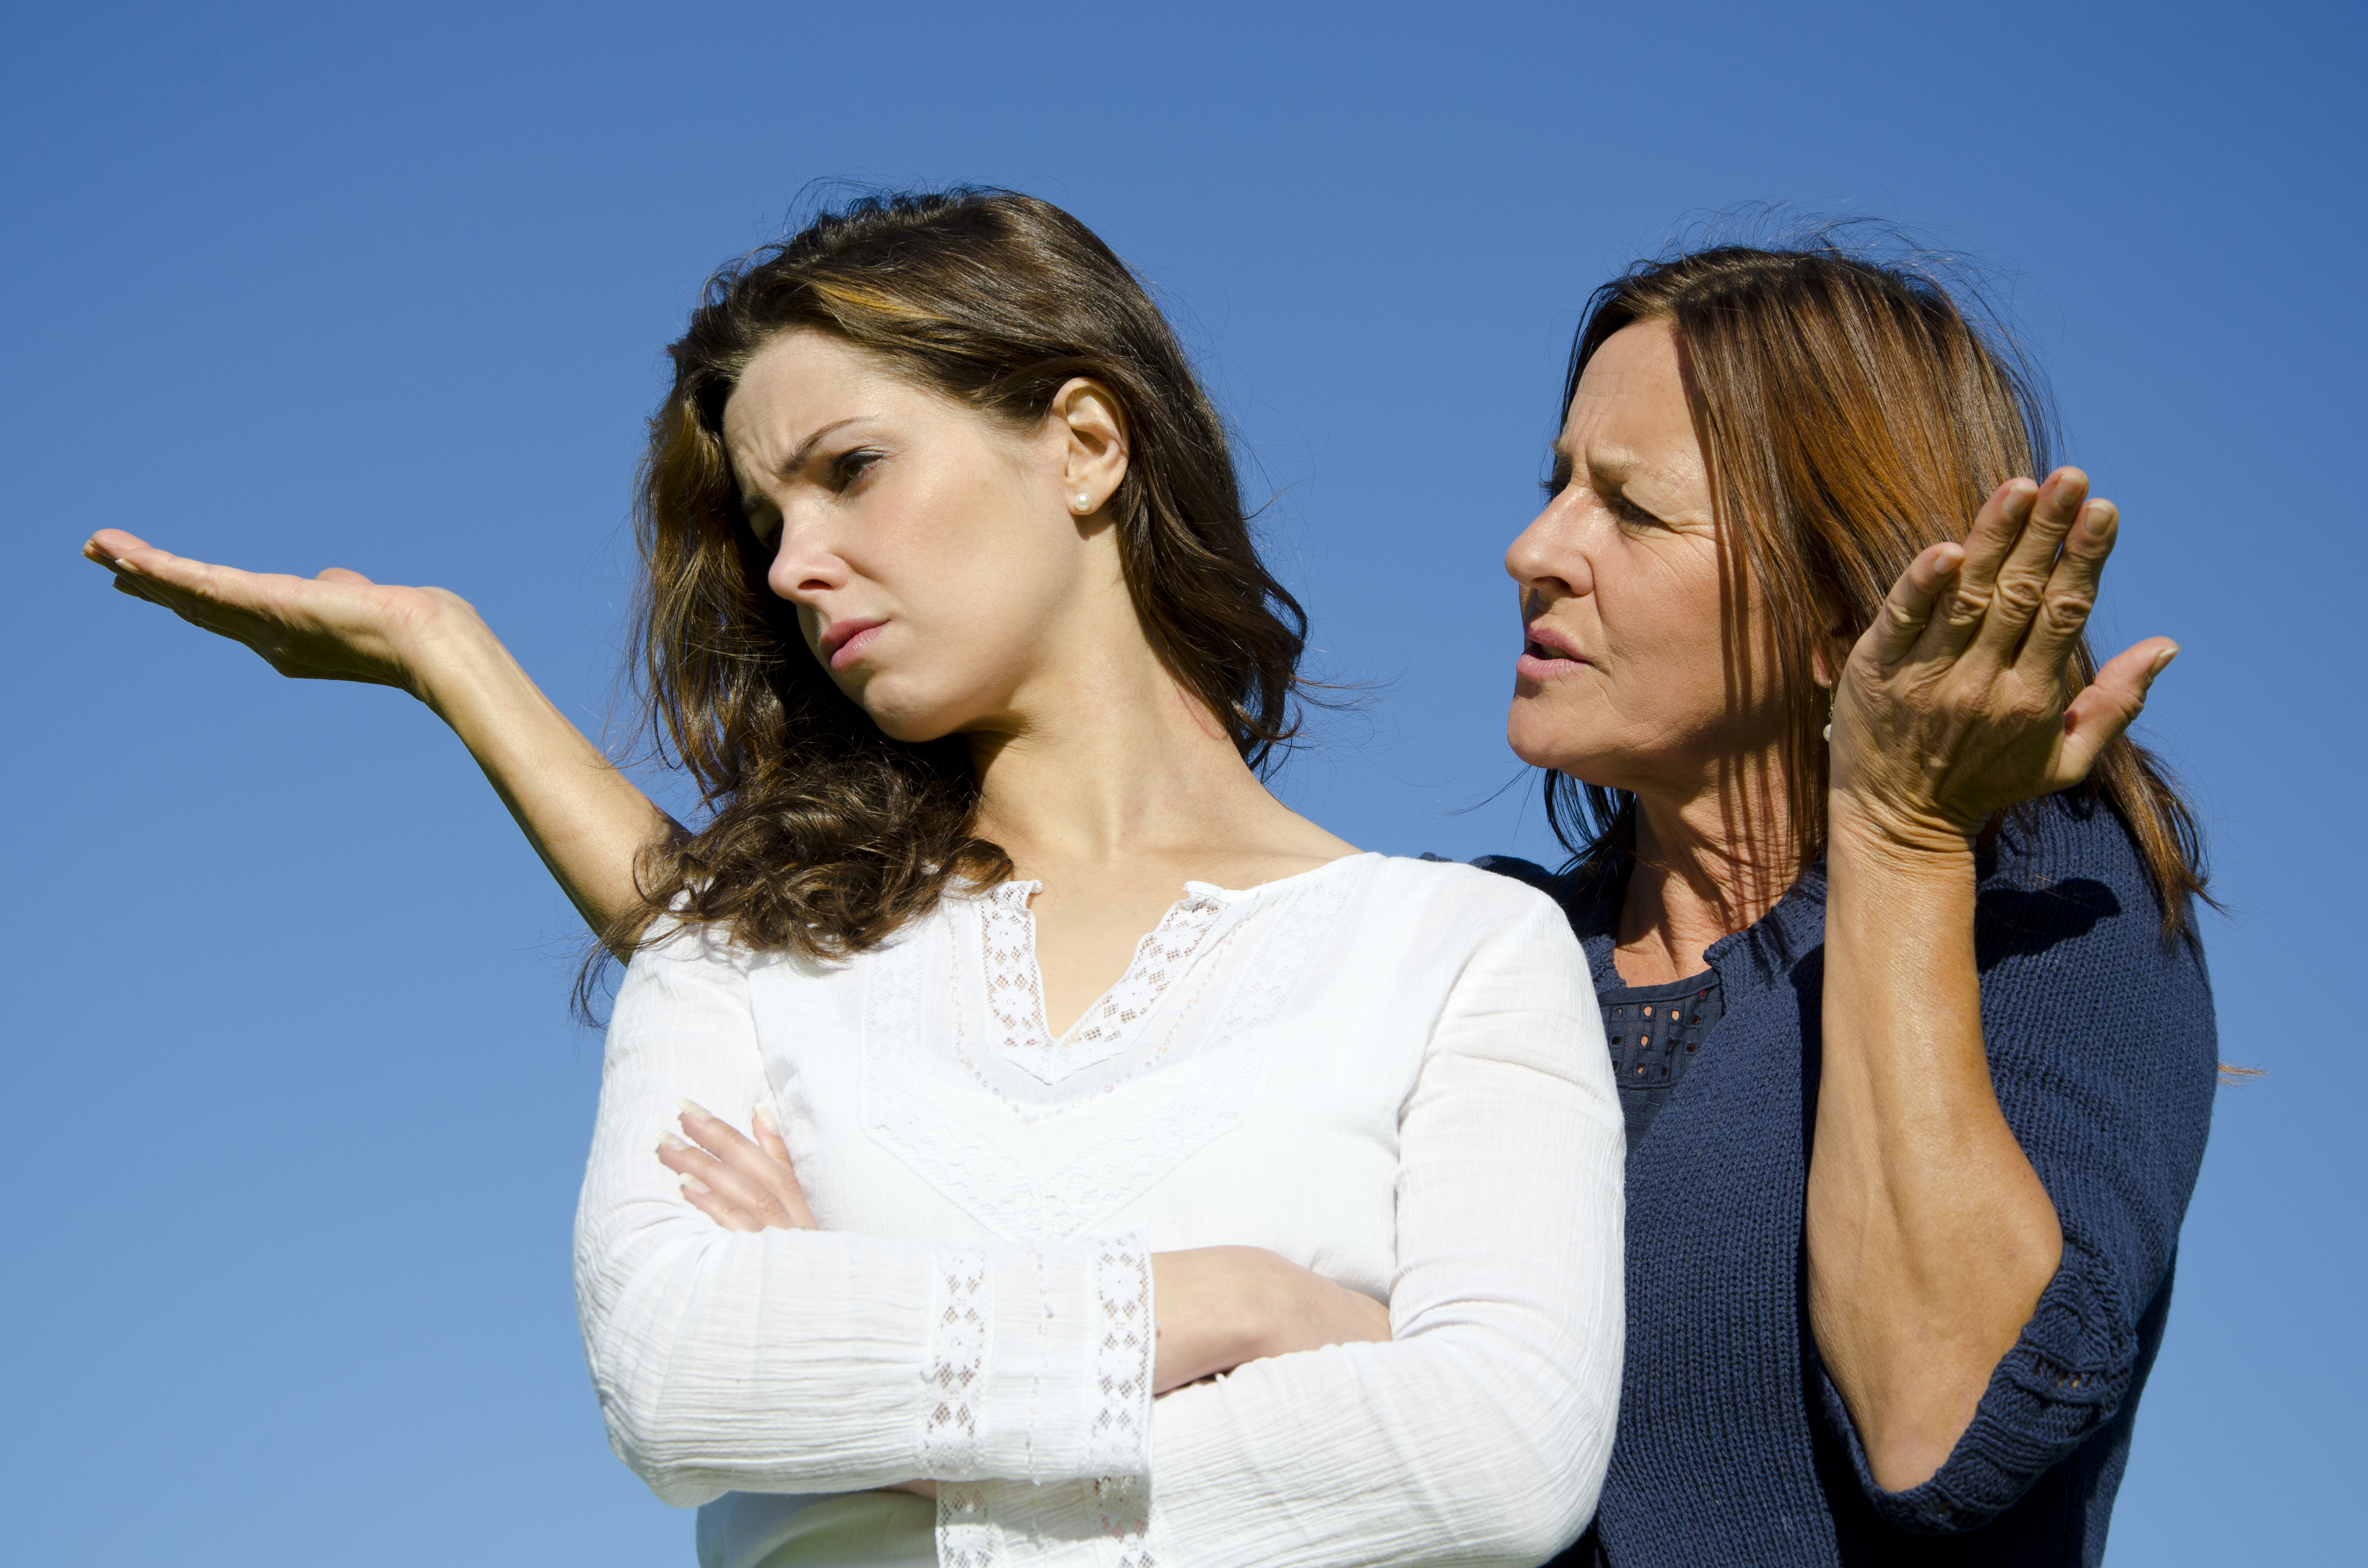 Una madre y su hija discutiendo. | Foto: Shutterstock